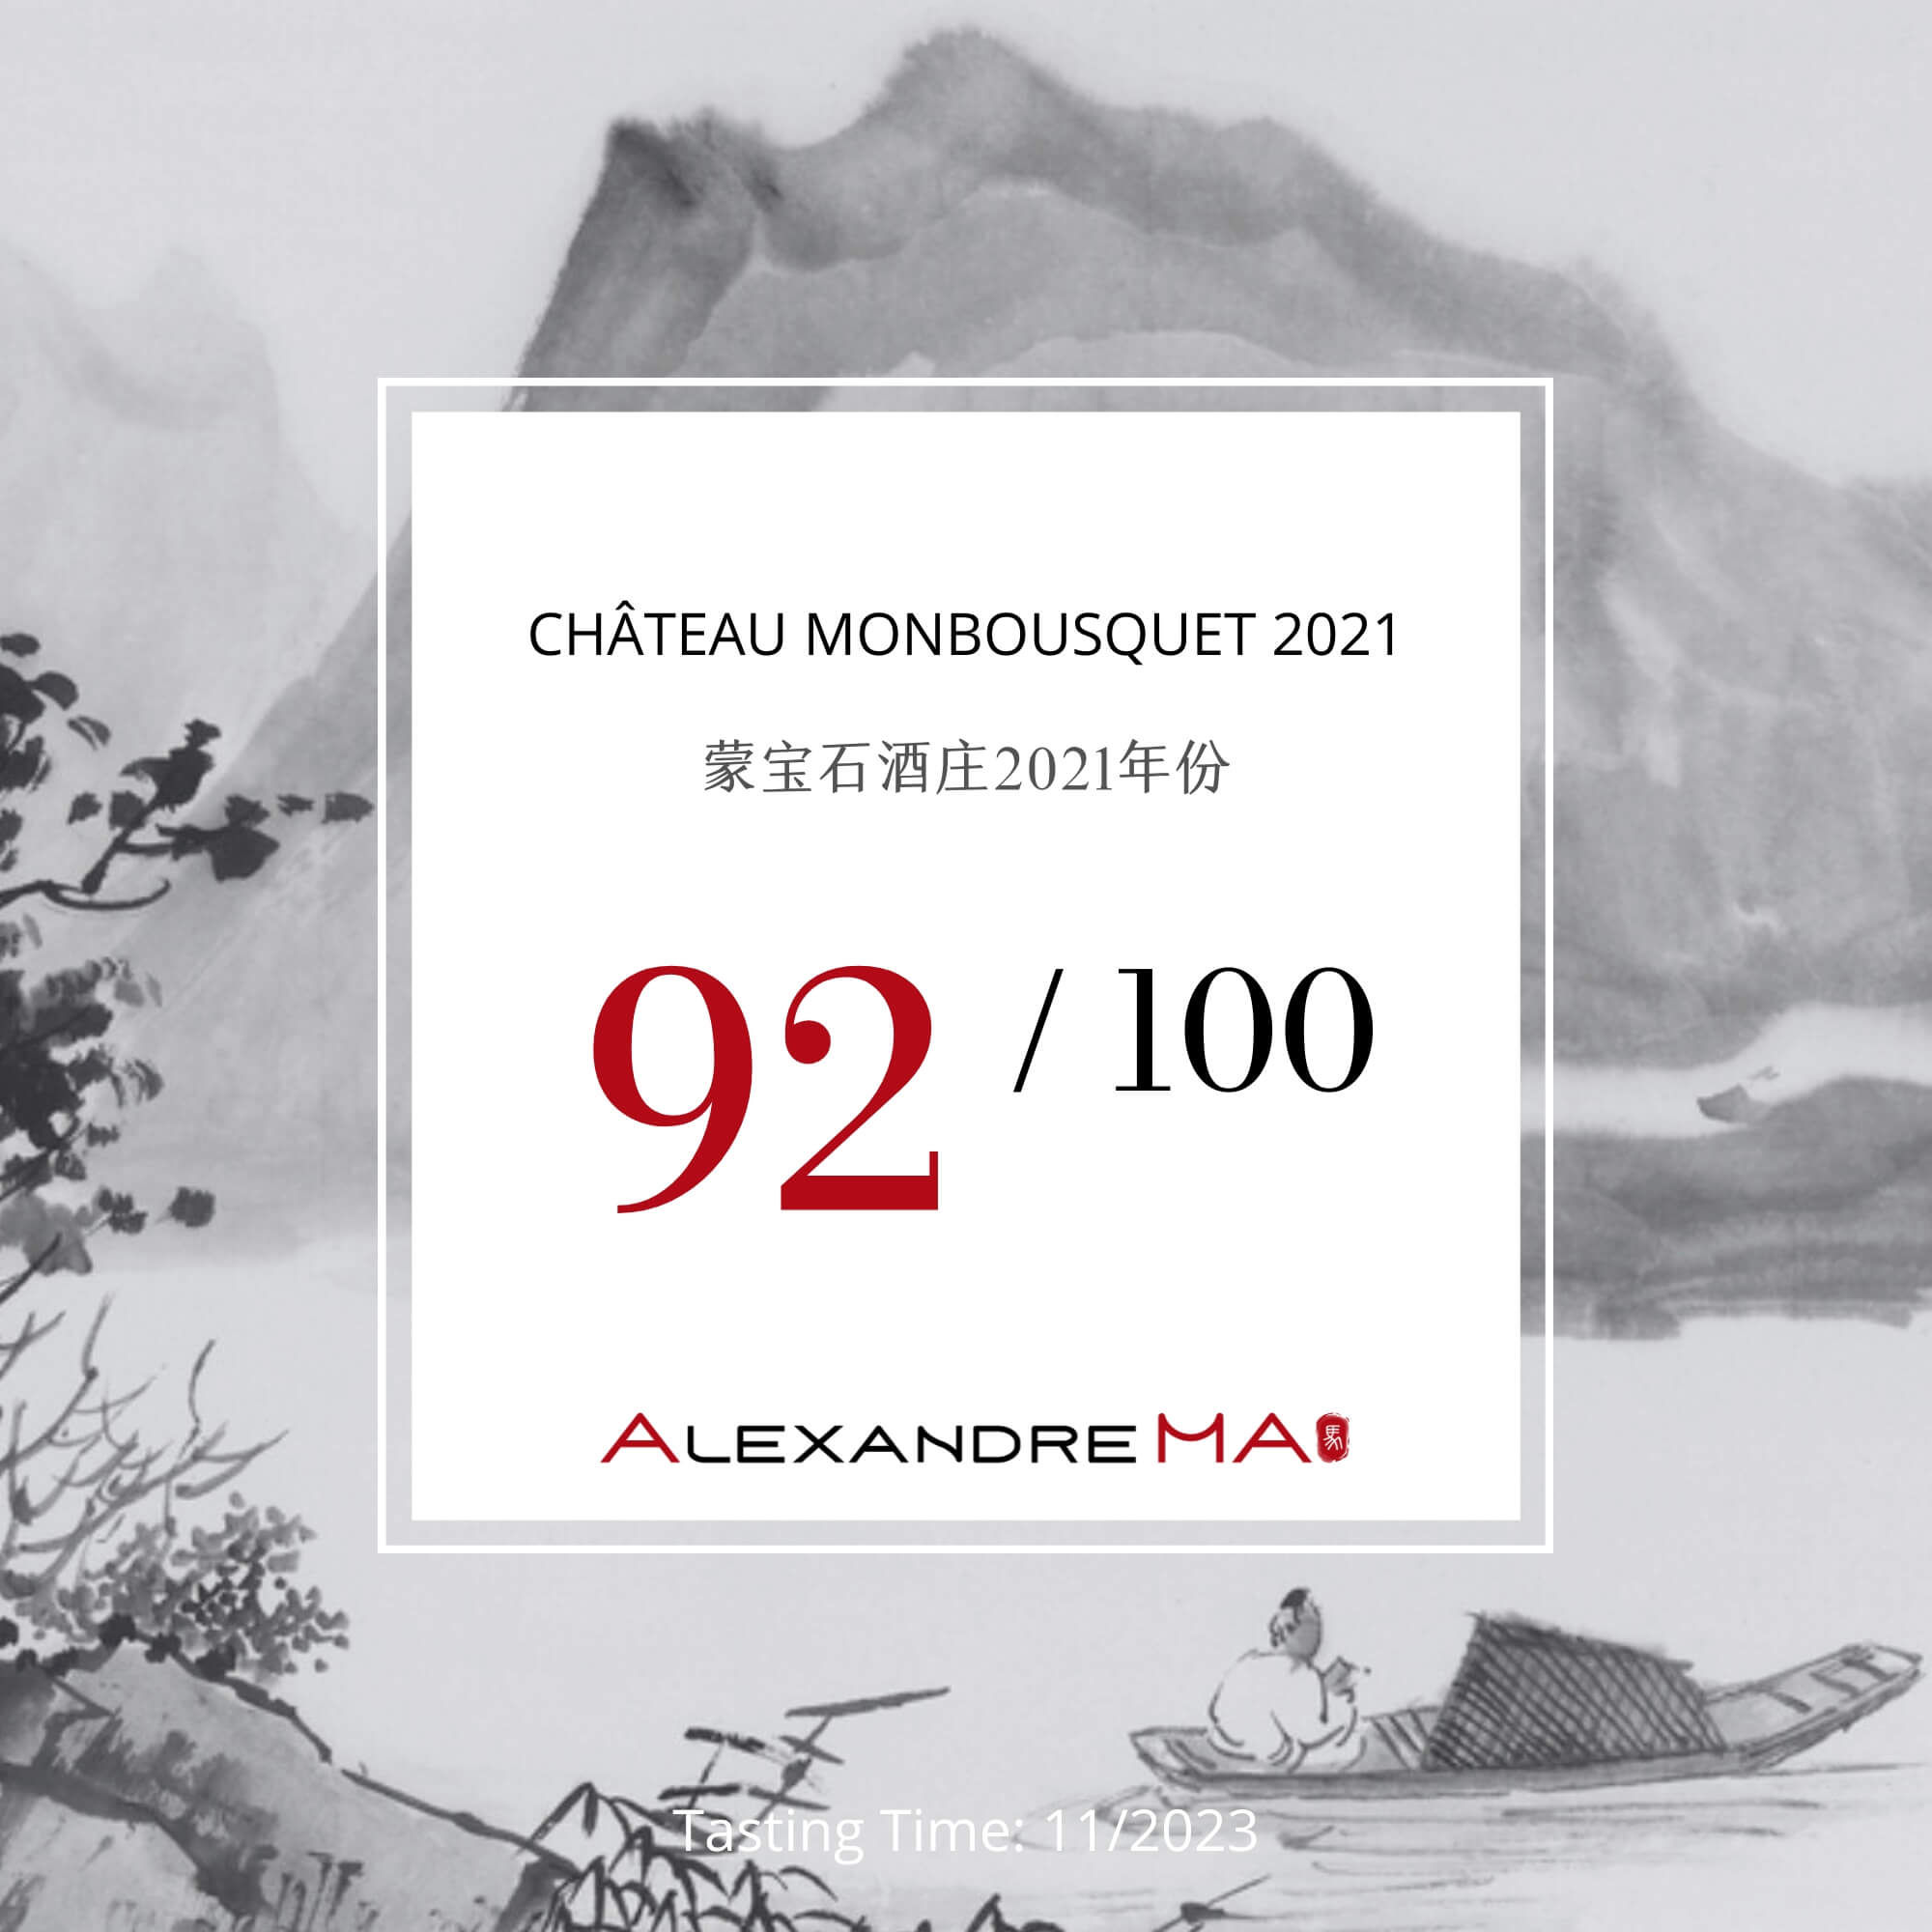 Château Monbousquet 2021 - Alexandre MA